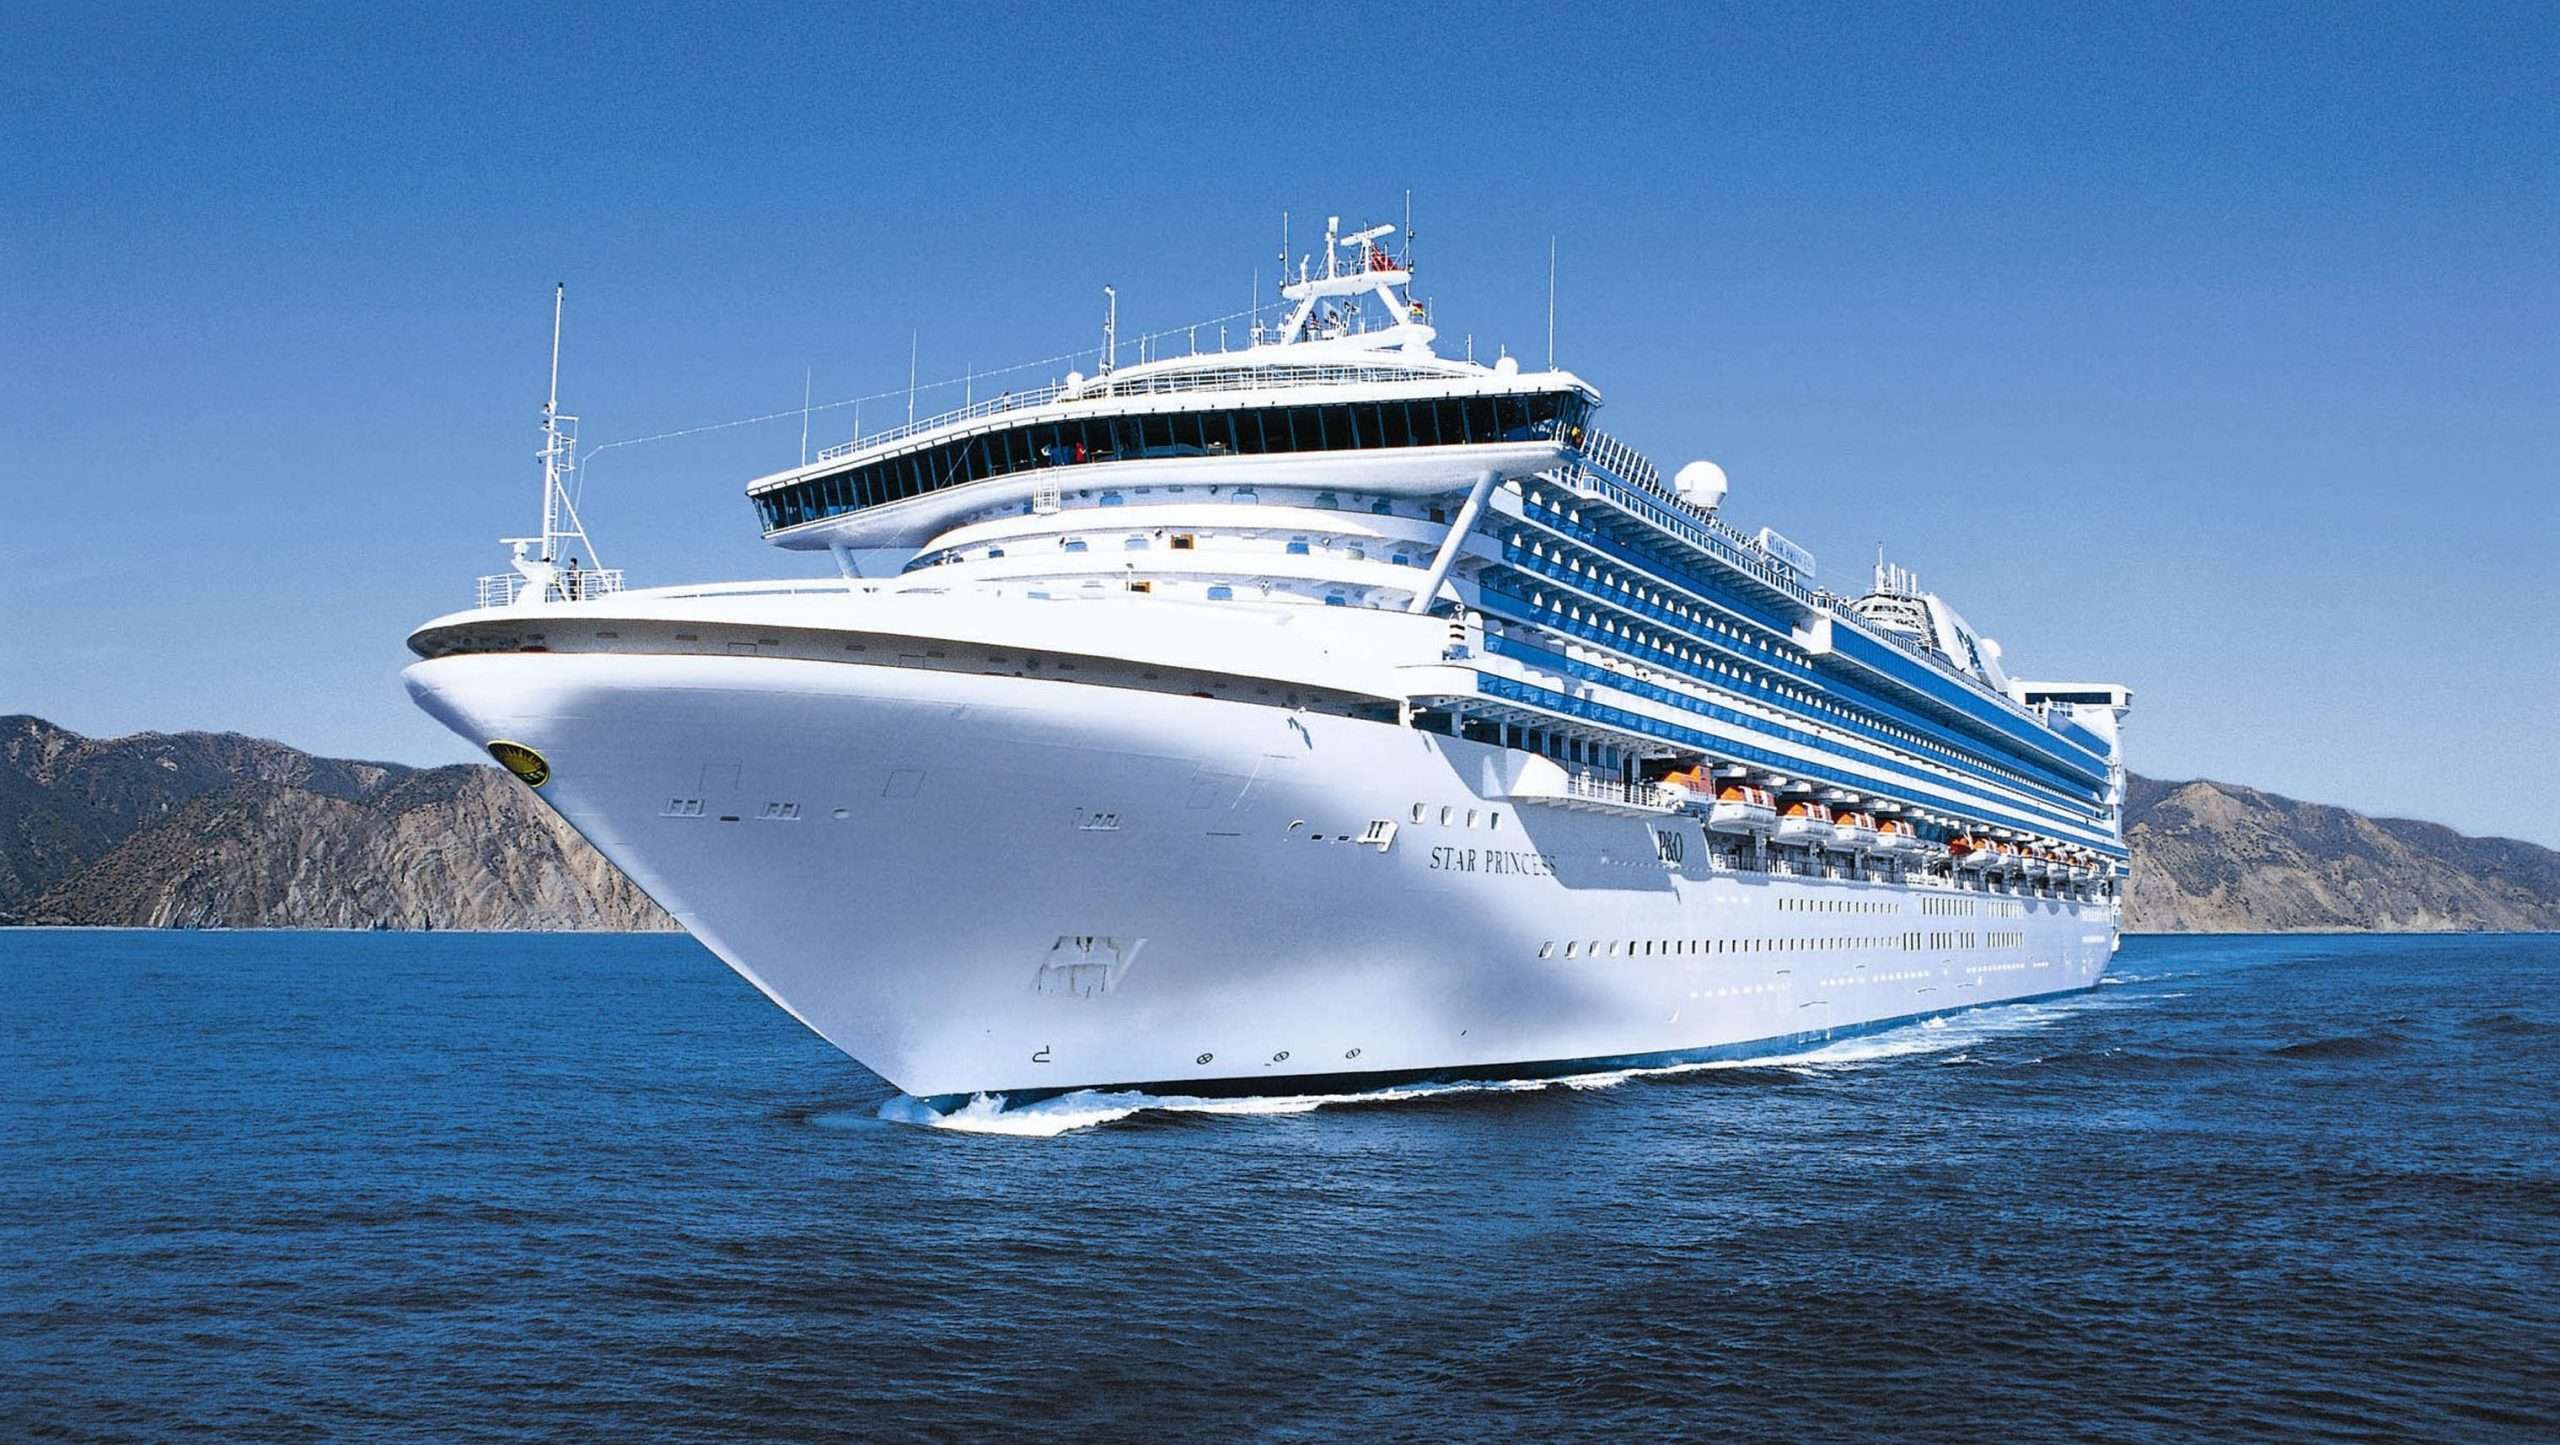 Cruise ship review: Princess Cruises